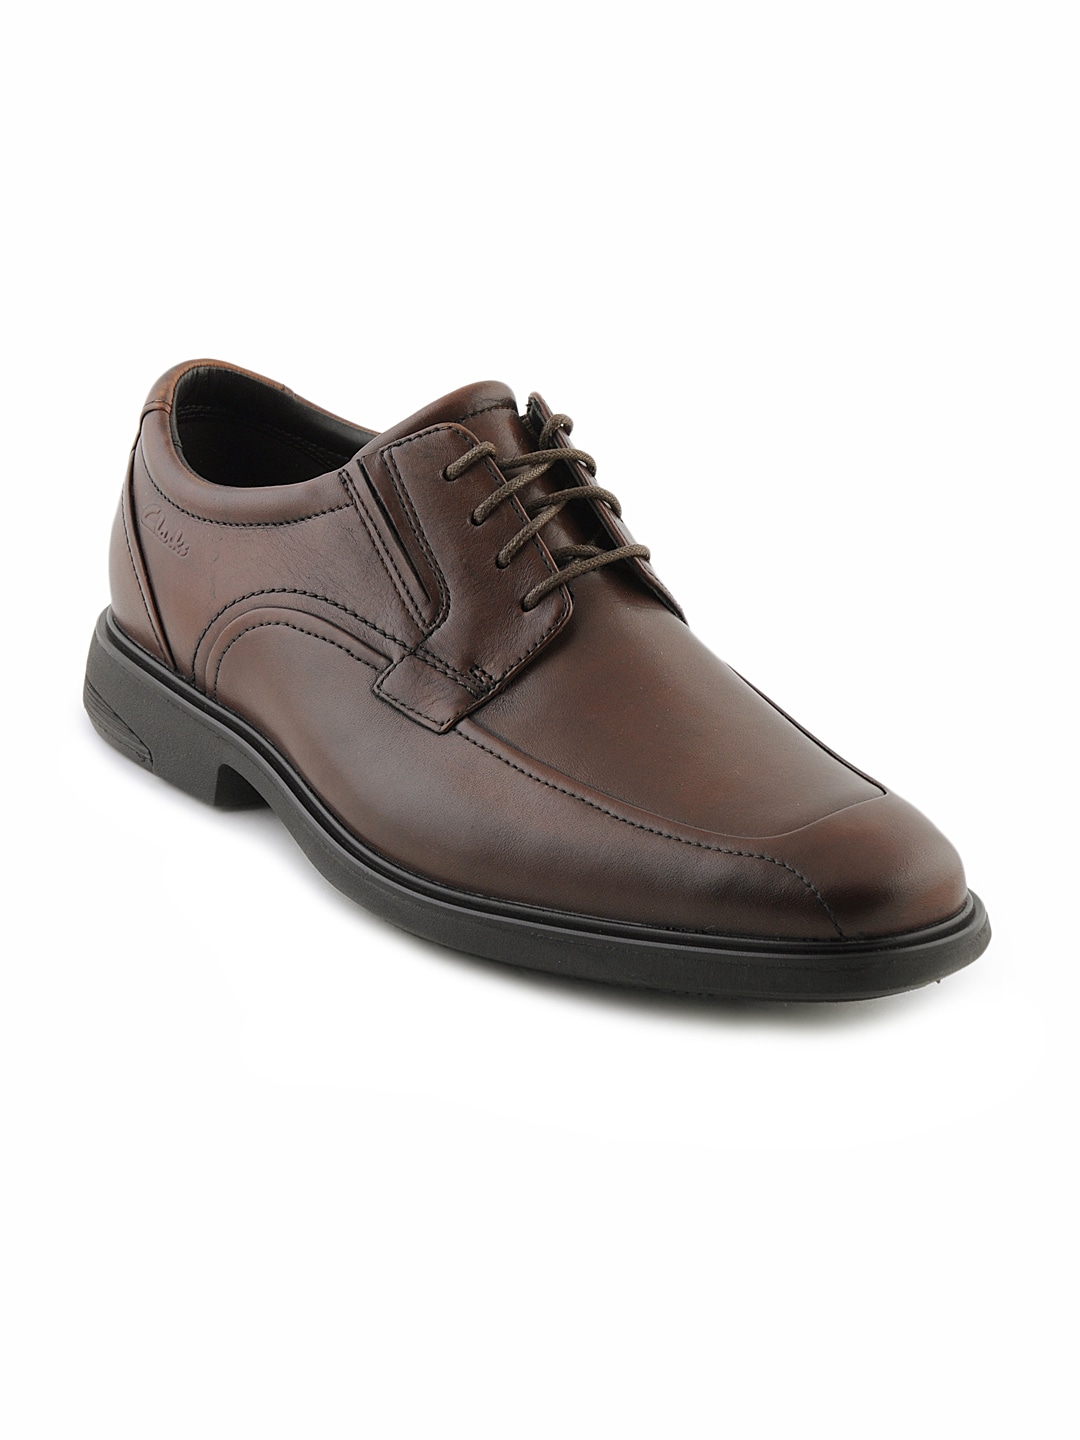 Clarks Men Brown Leather Formal Shoes